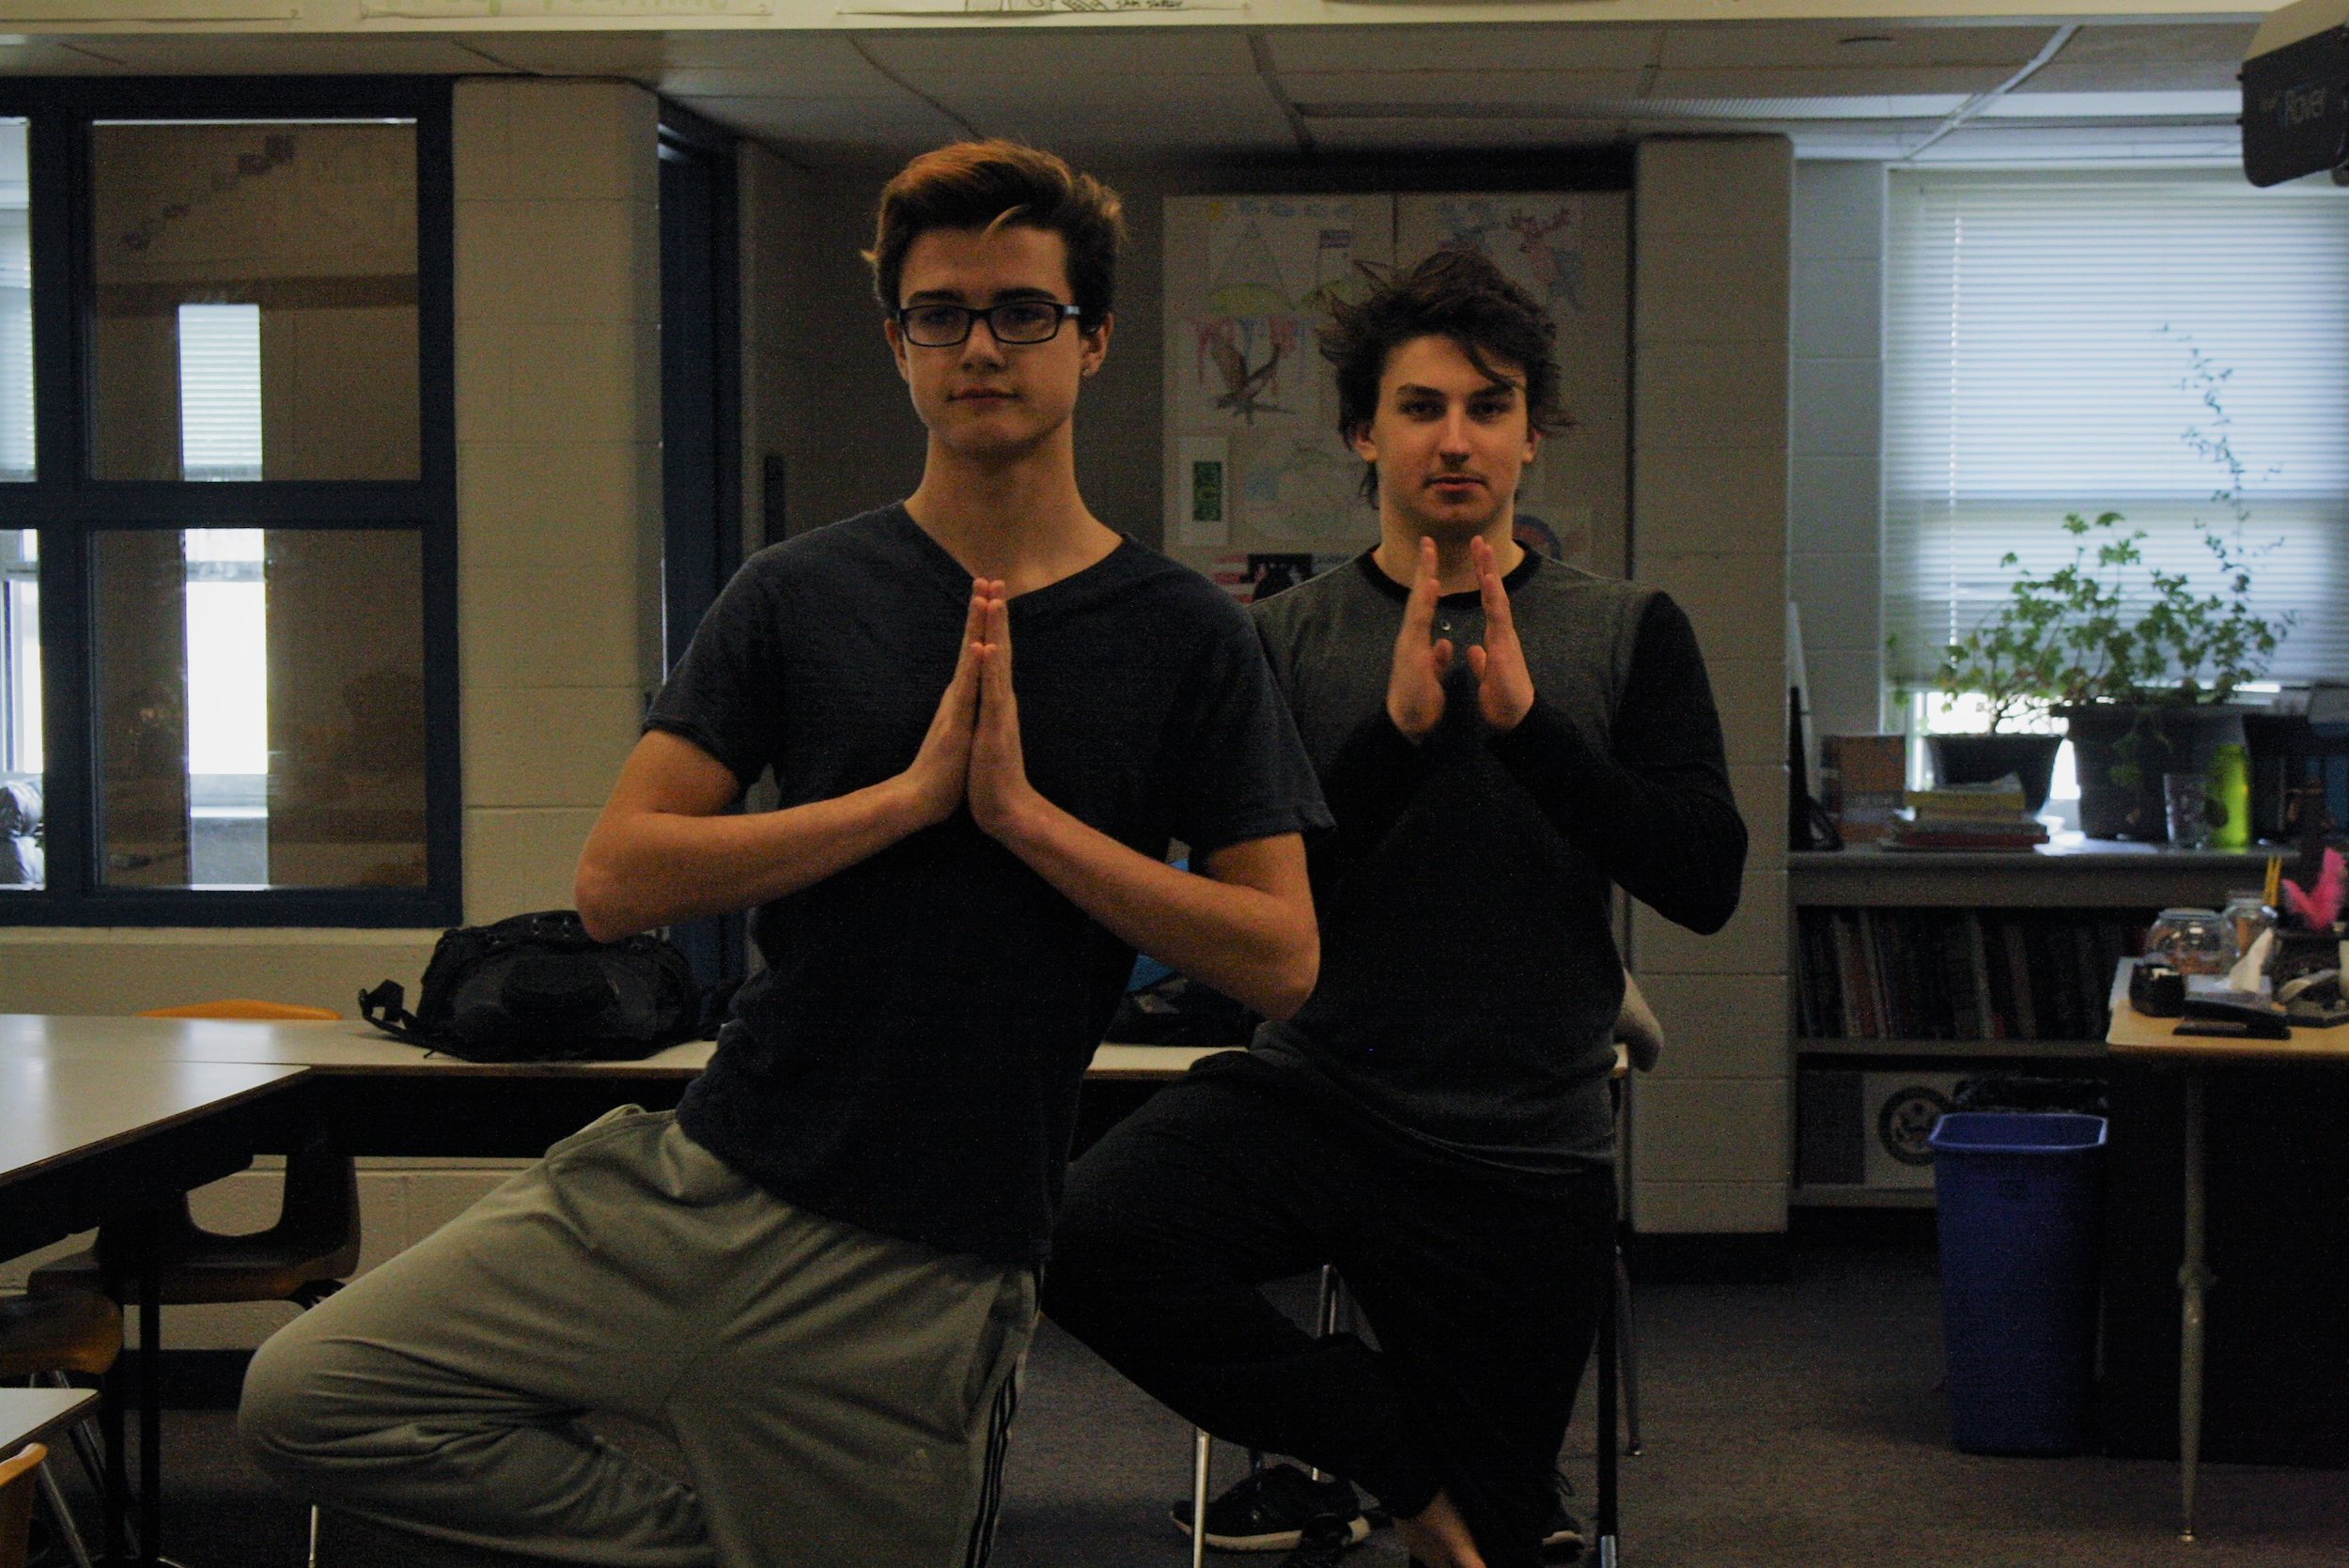 students doing yoga poses